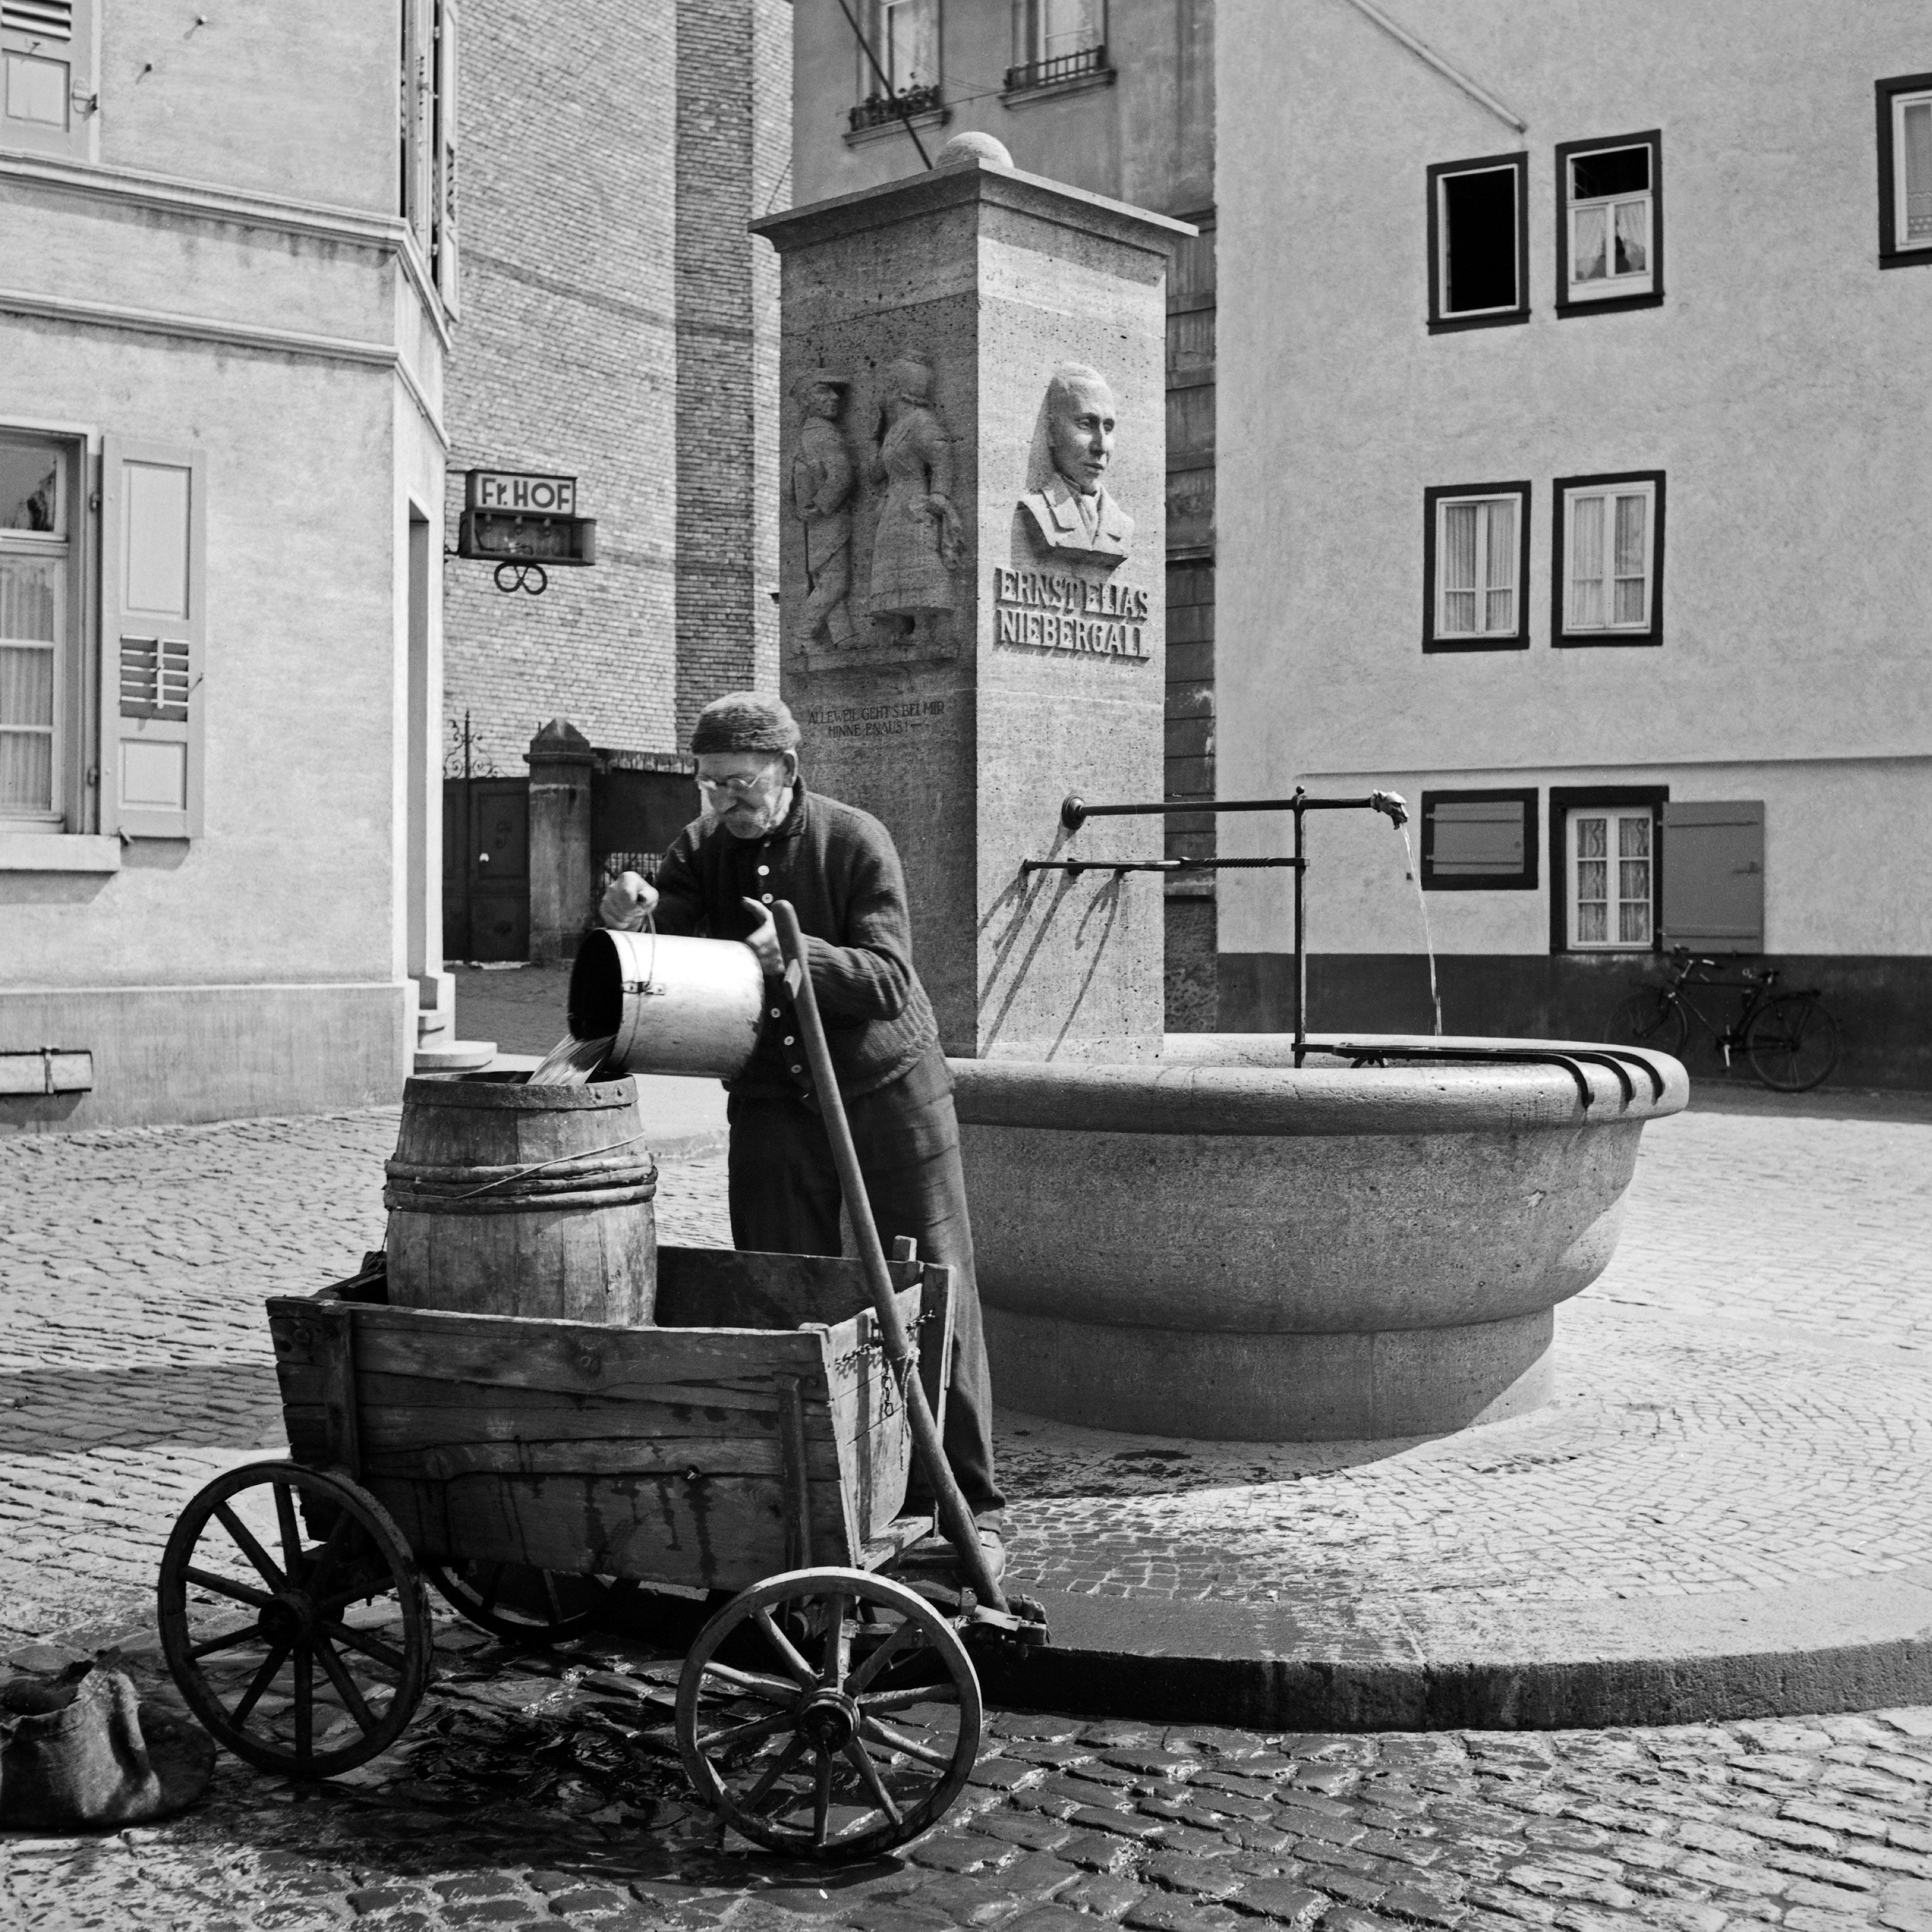 Black and White Photograph Karl Heinrich Lämmel - Fontaine Ernst Elias Niebergall Darmstadt, Allemagne 1938 Imprimé ultérieurement 